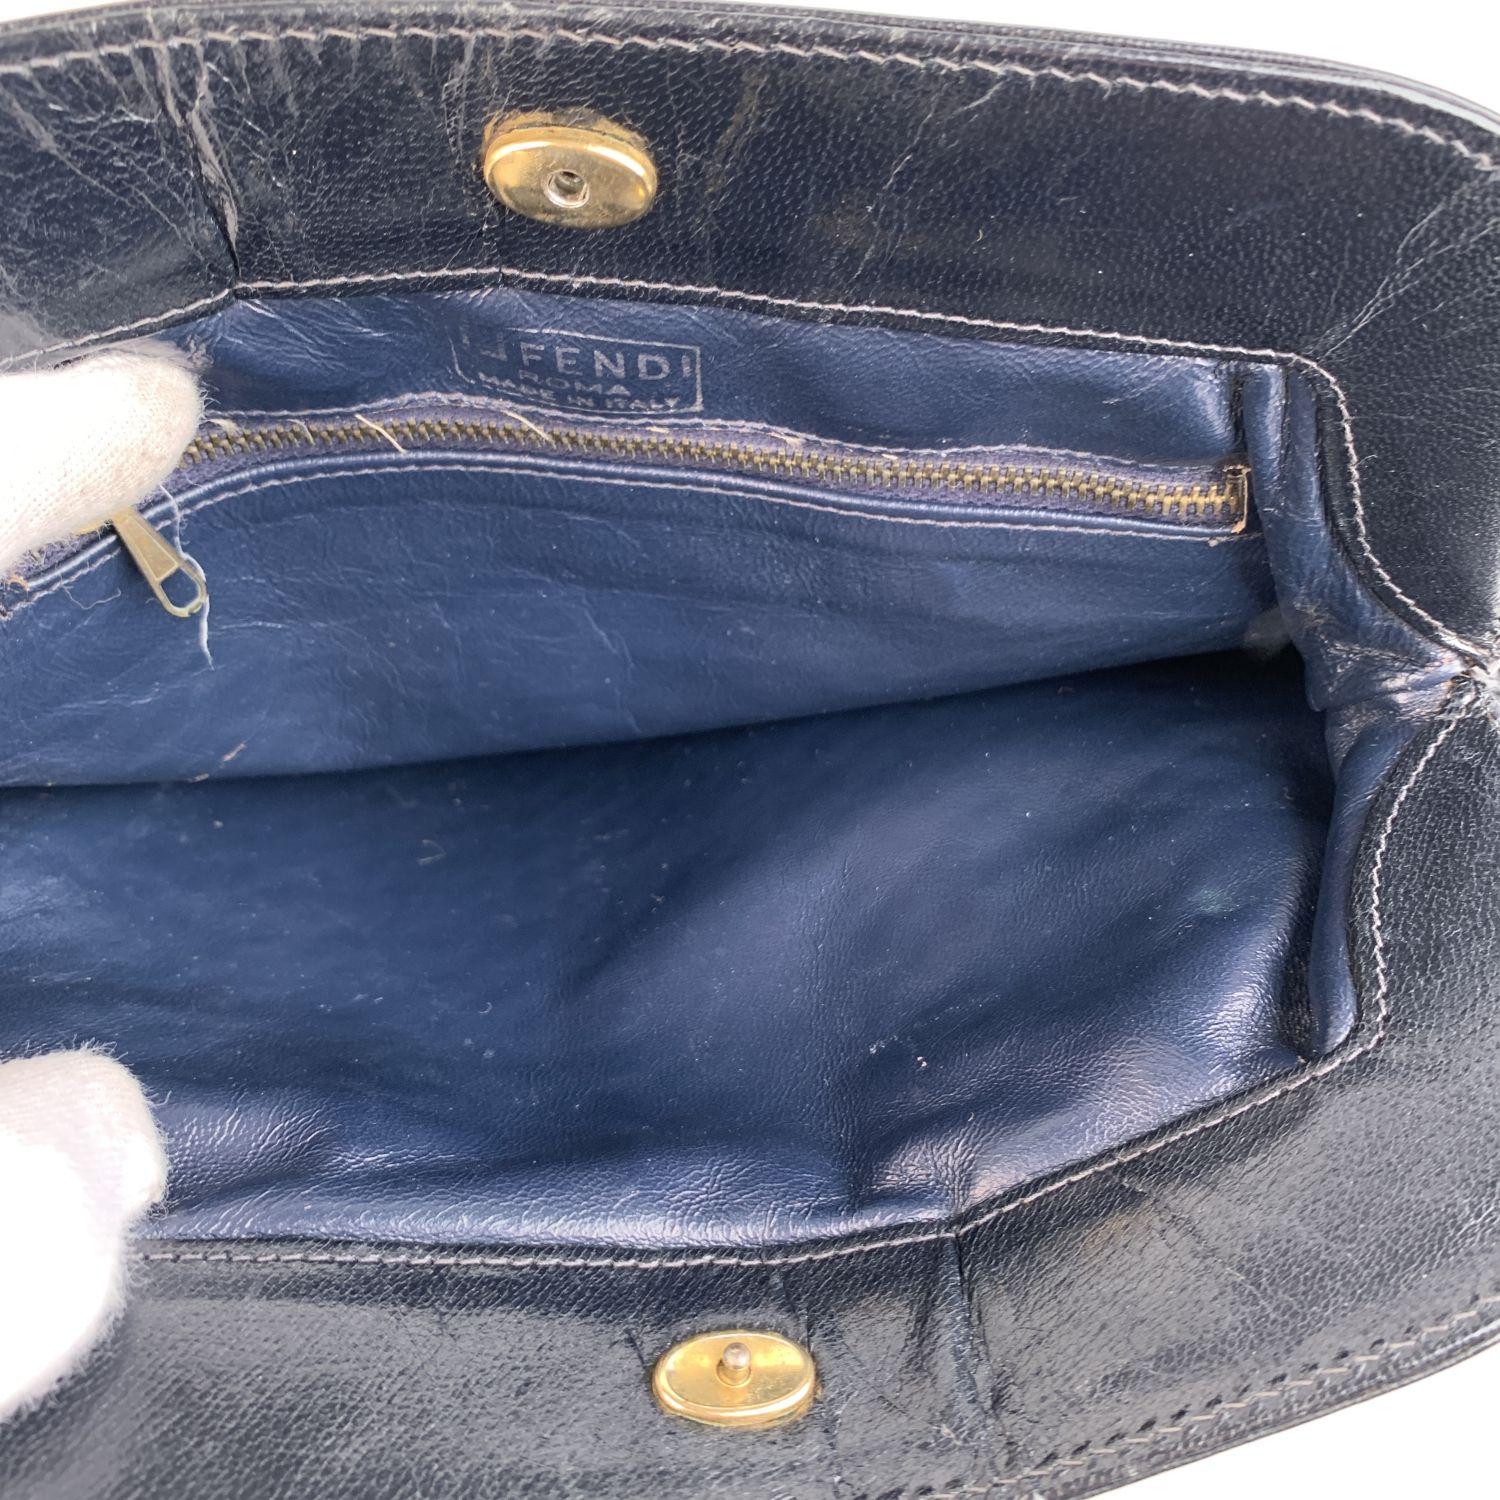 Black Fendi Vintage Navy Blue Woven Leather Clutch Bag Handbag